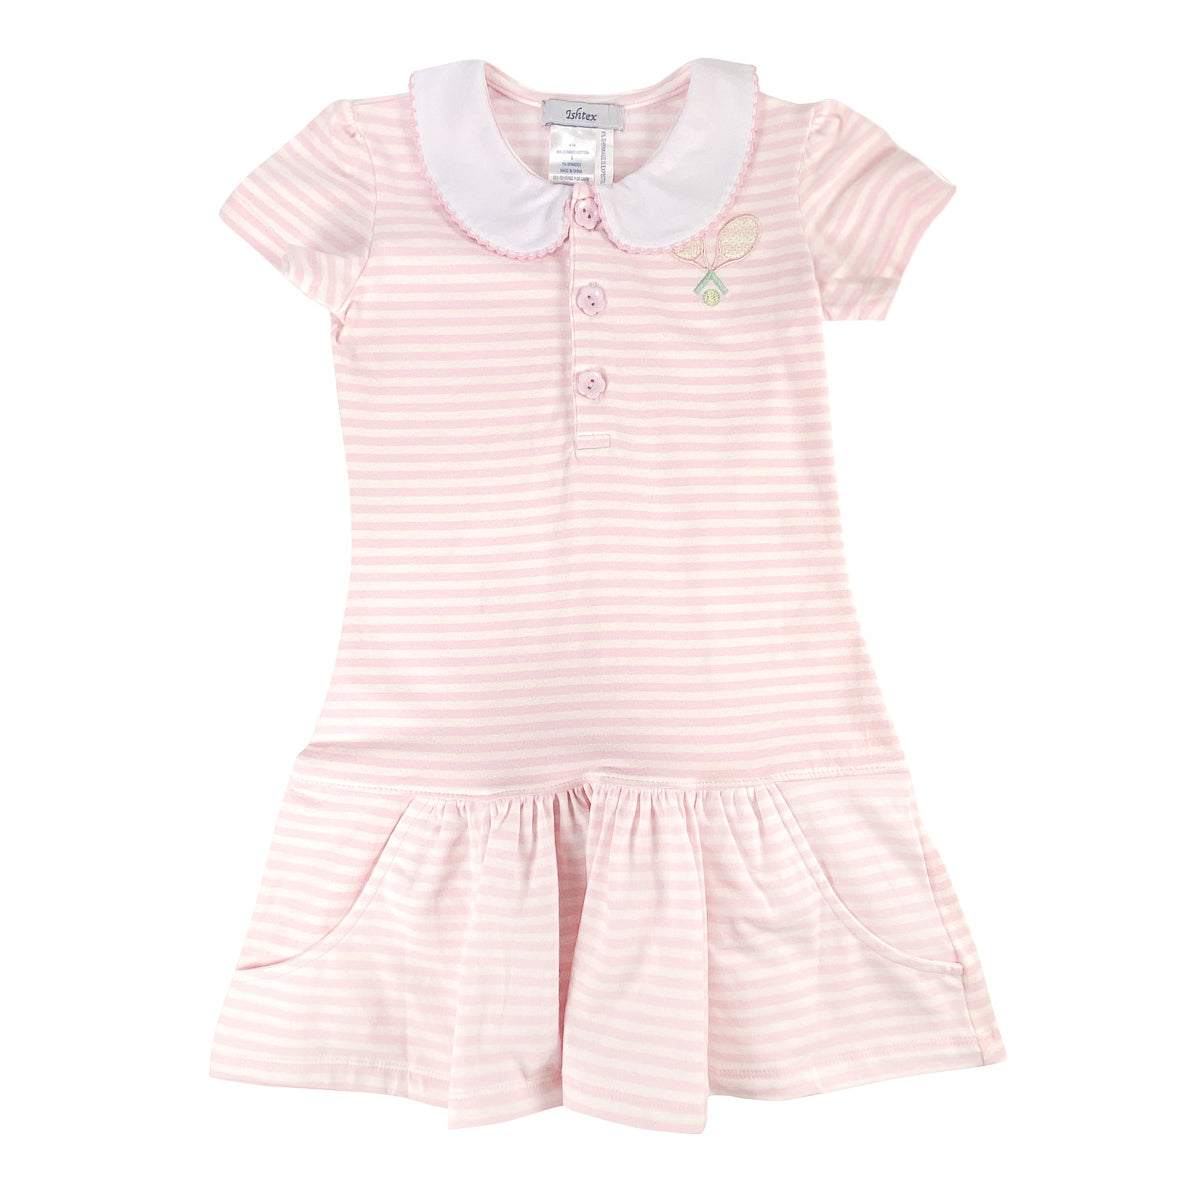 Toddler Girl's Pink Stripes Tennis Dress by Ishtex